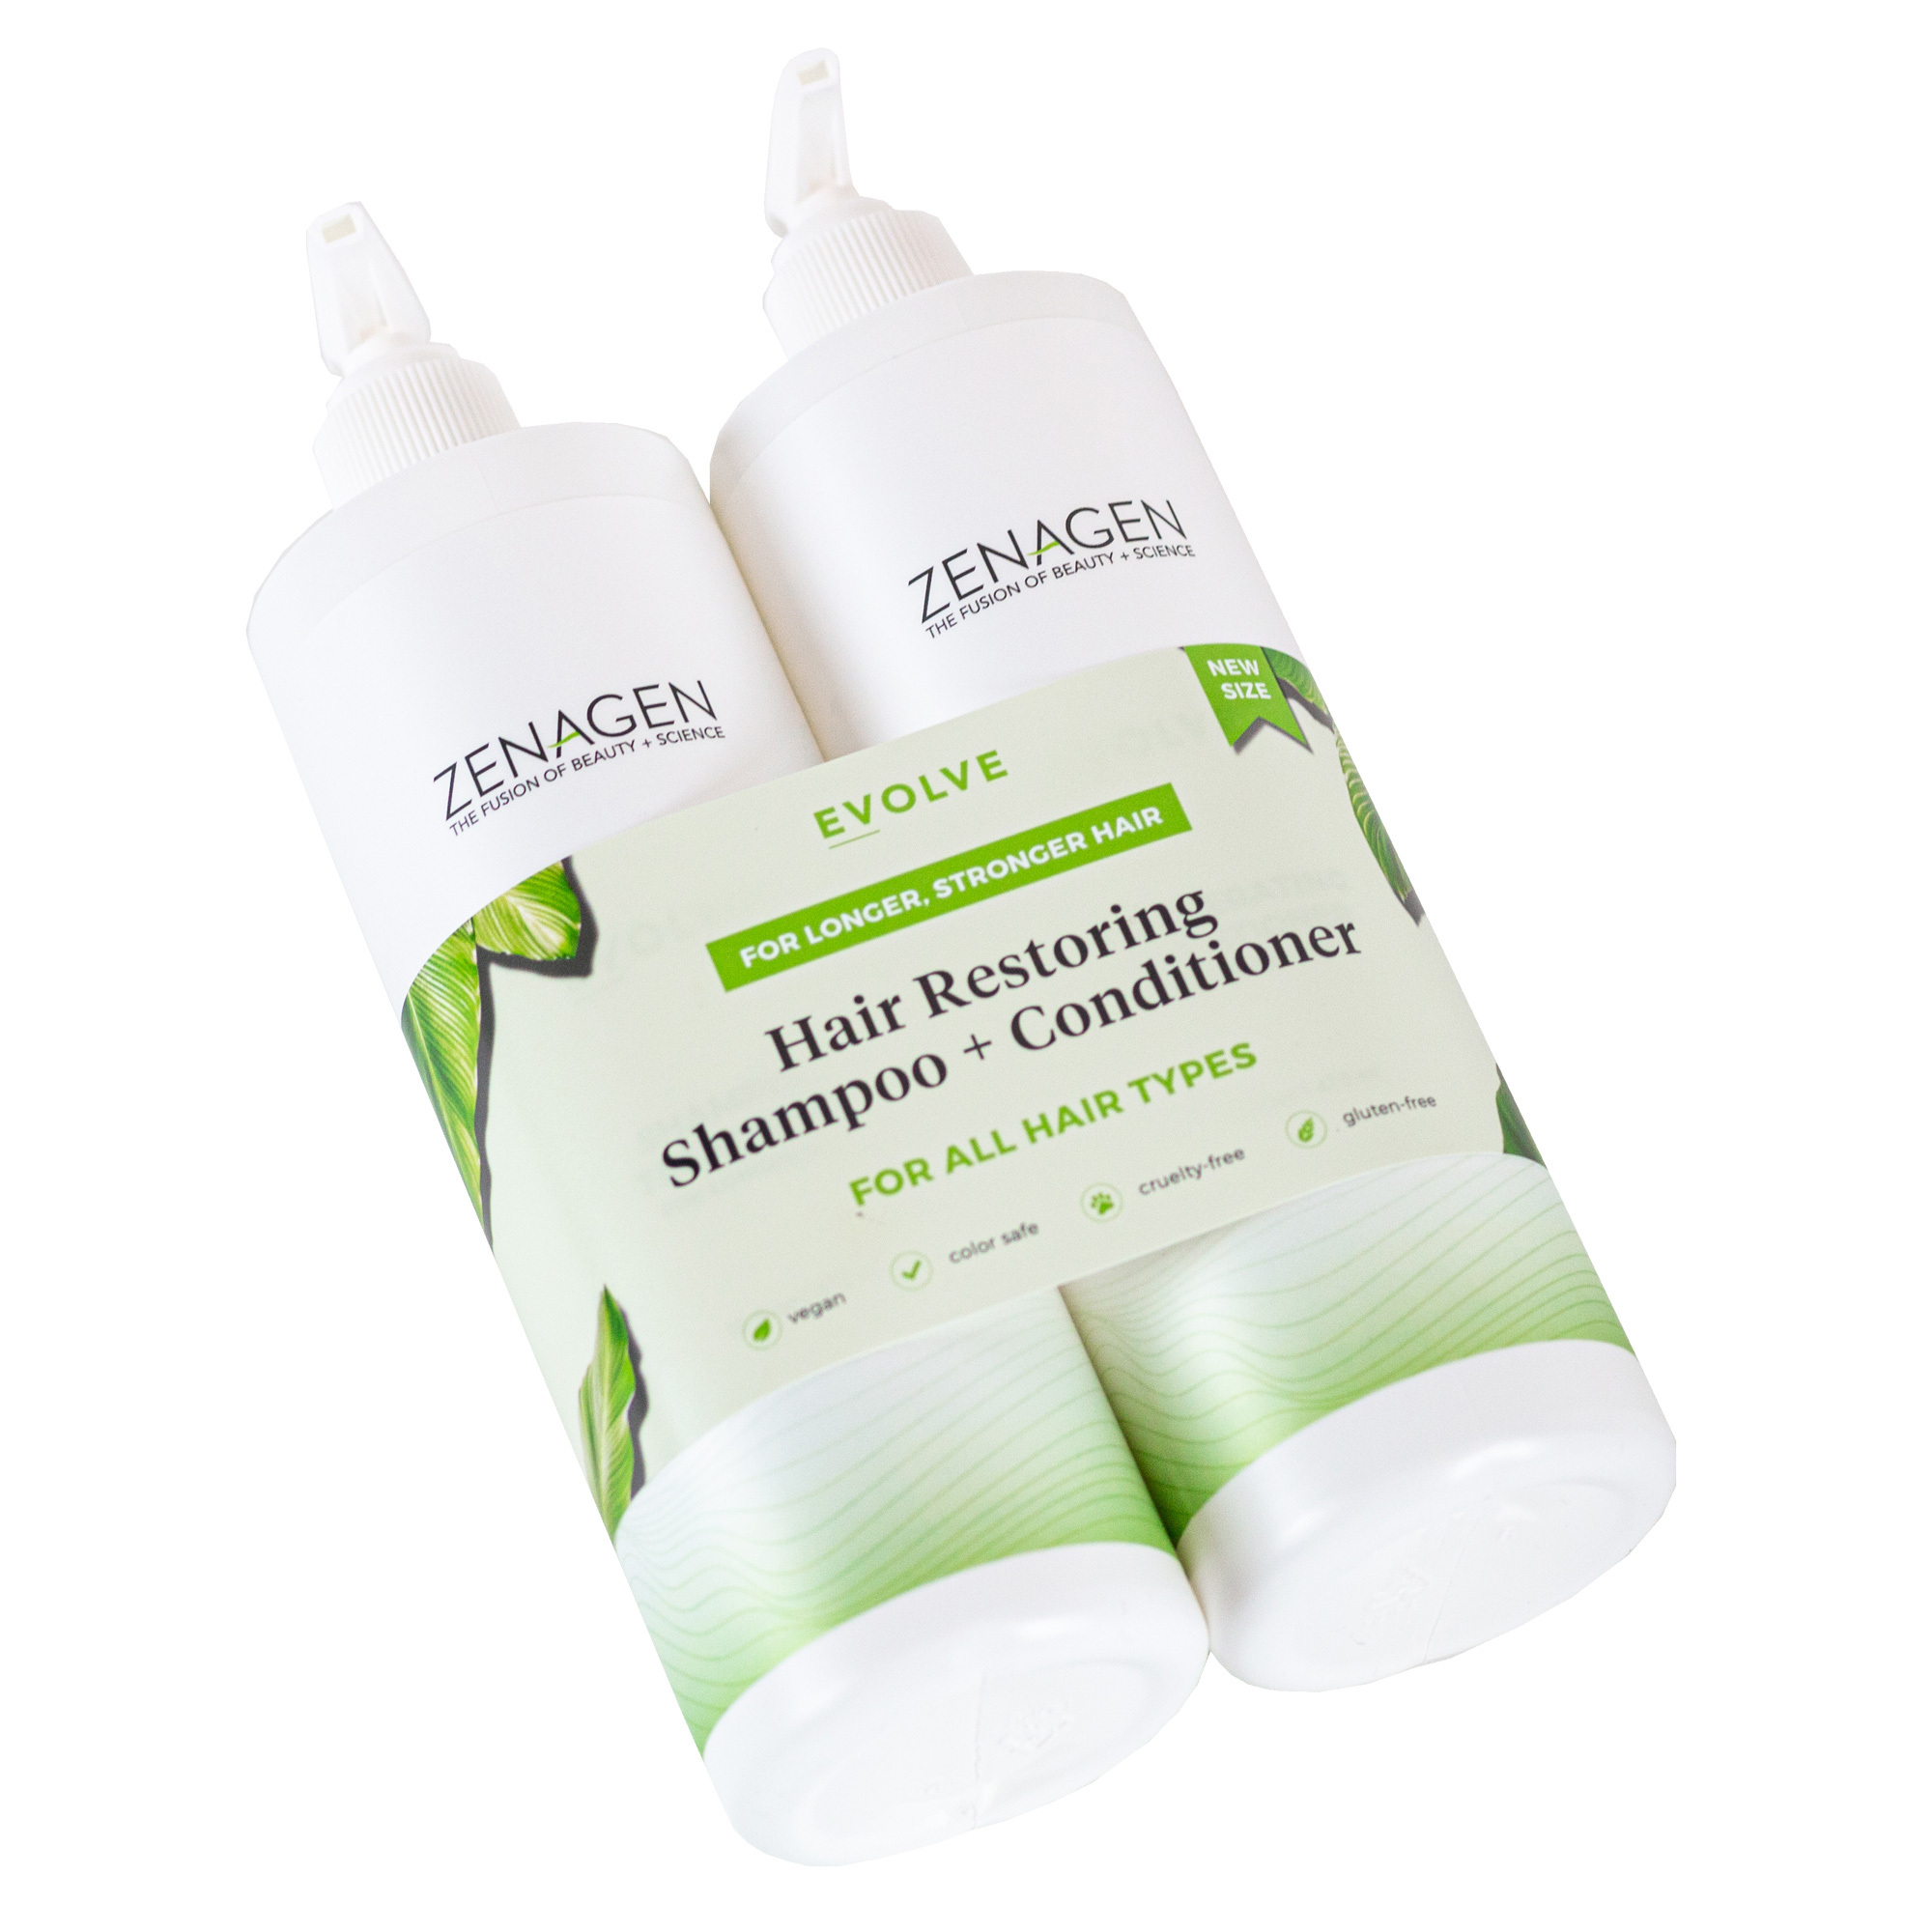 Zenagen Evolve Shampoo & Conditioner 16oz. Duo 